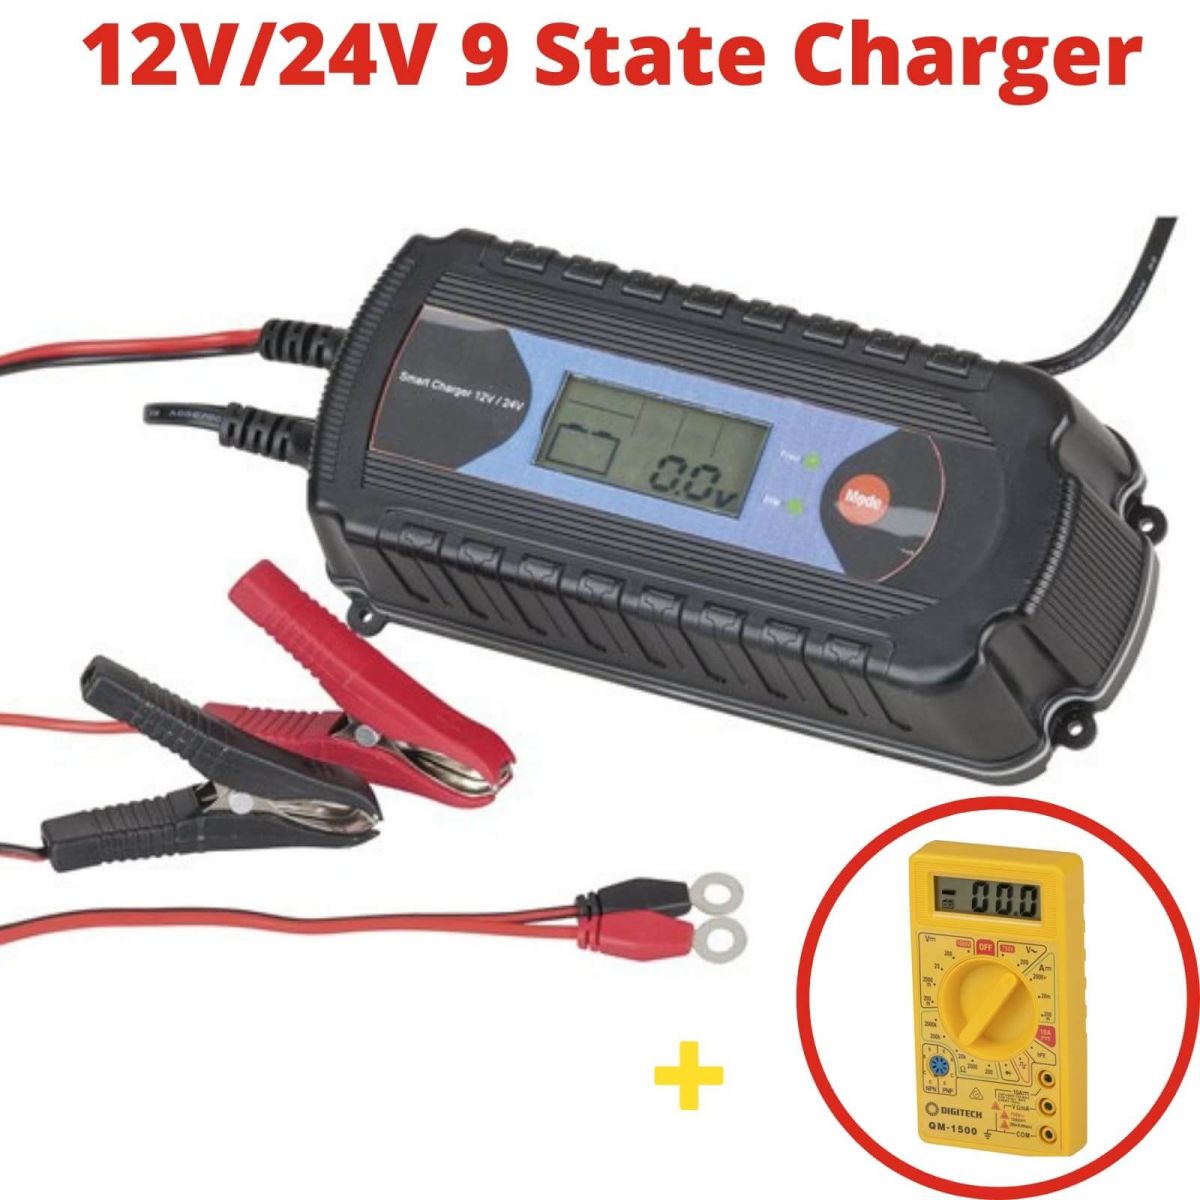 Smart battery charger, 9 State Charger, 12V/24V Battery charger